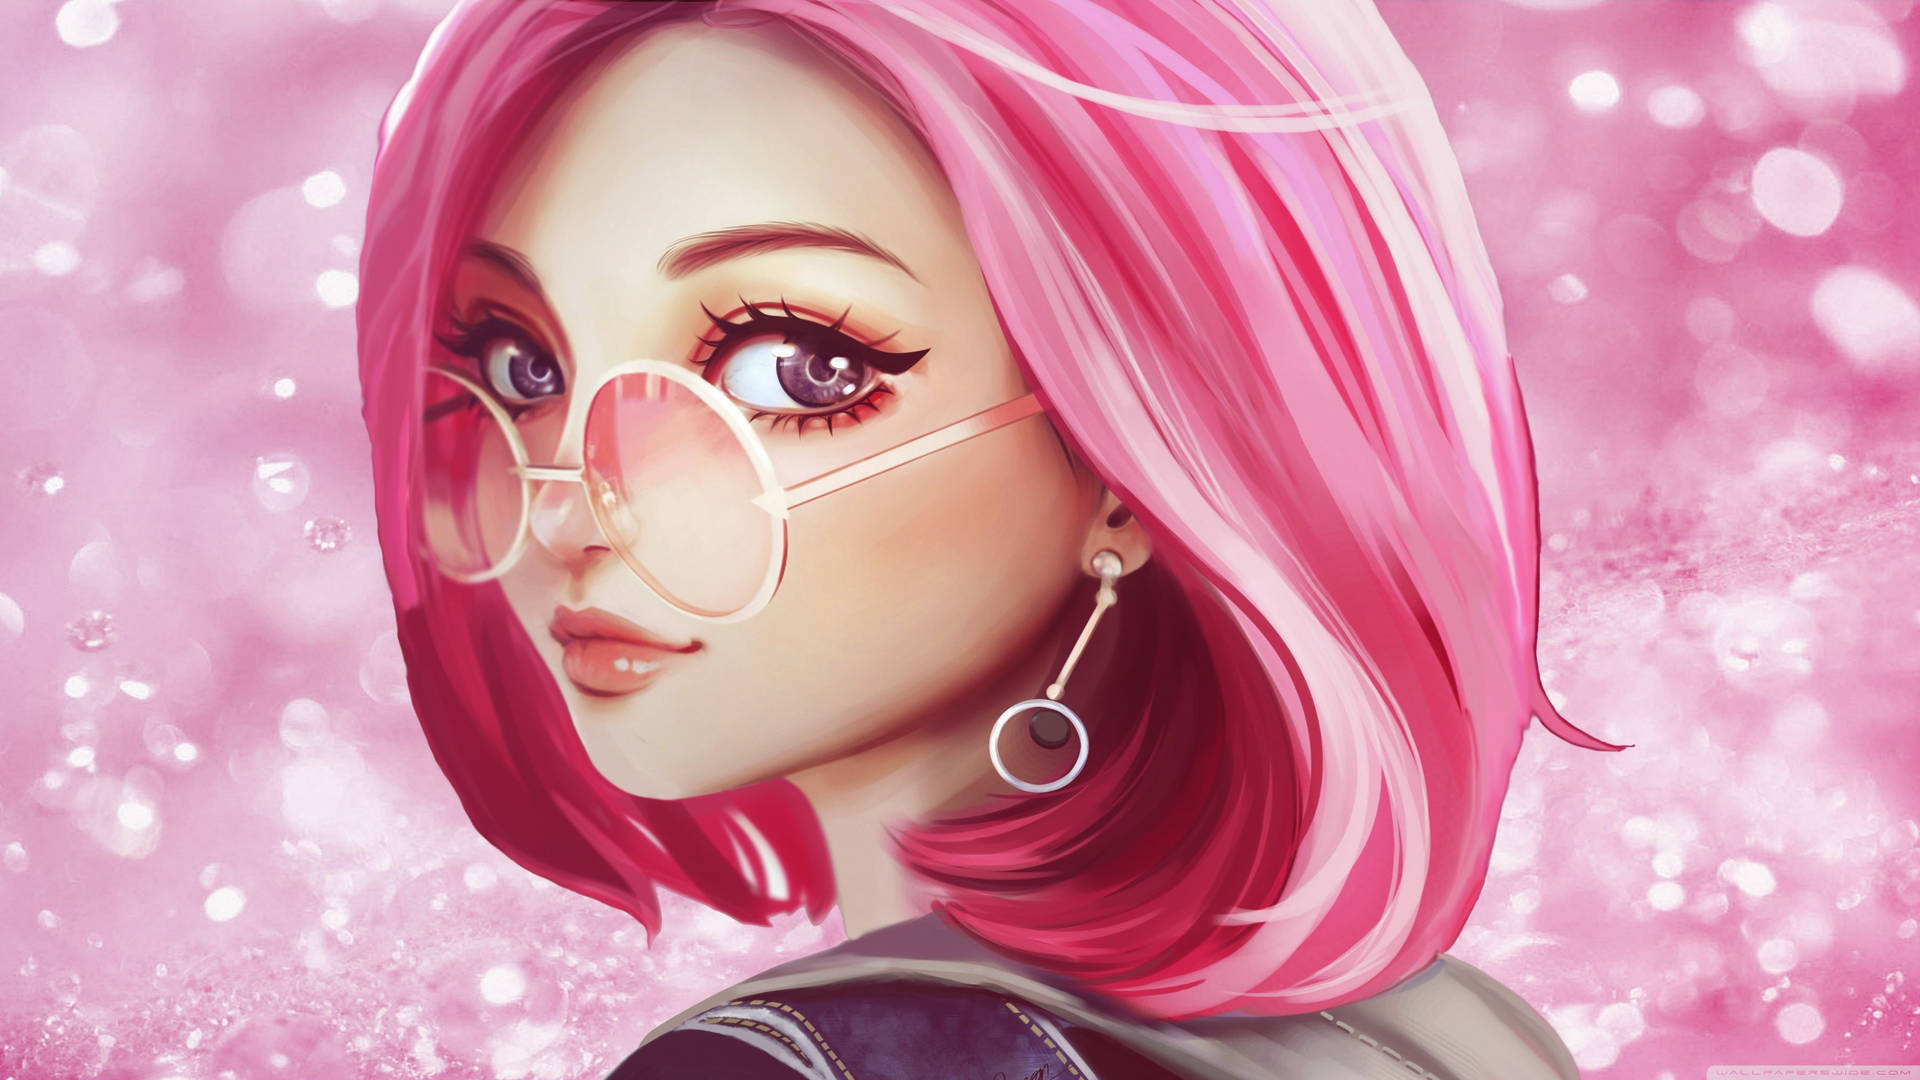 Pretty Girl Cartoon With Pink Hair